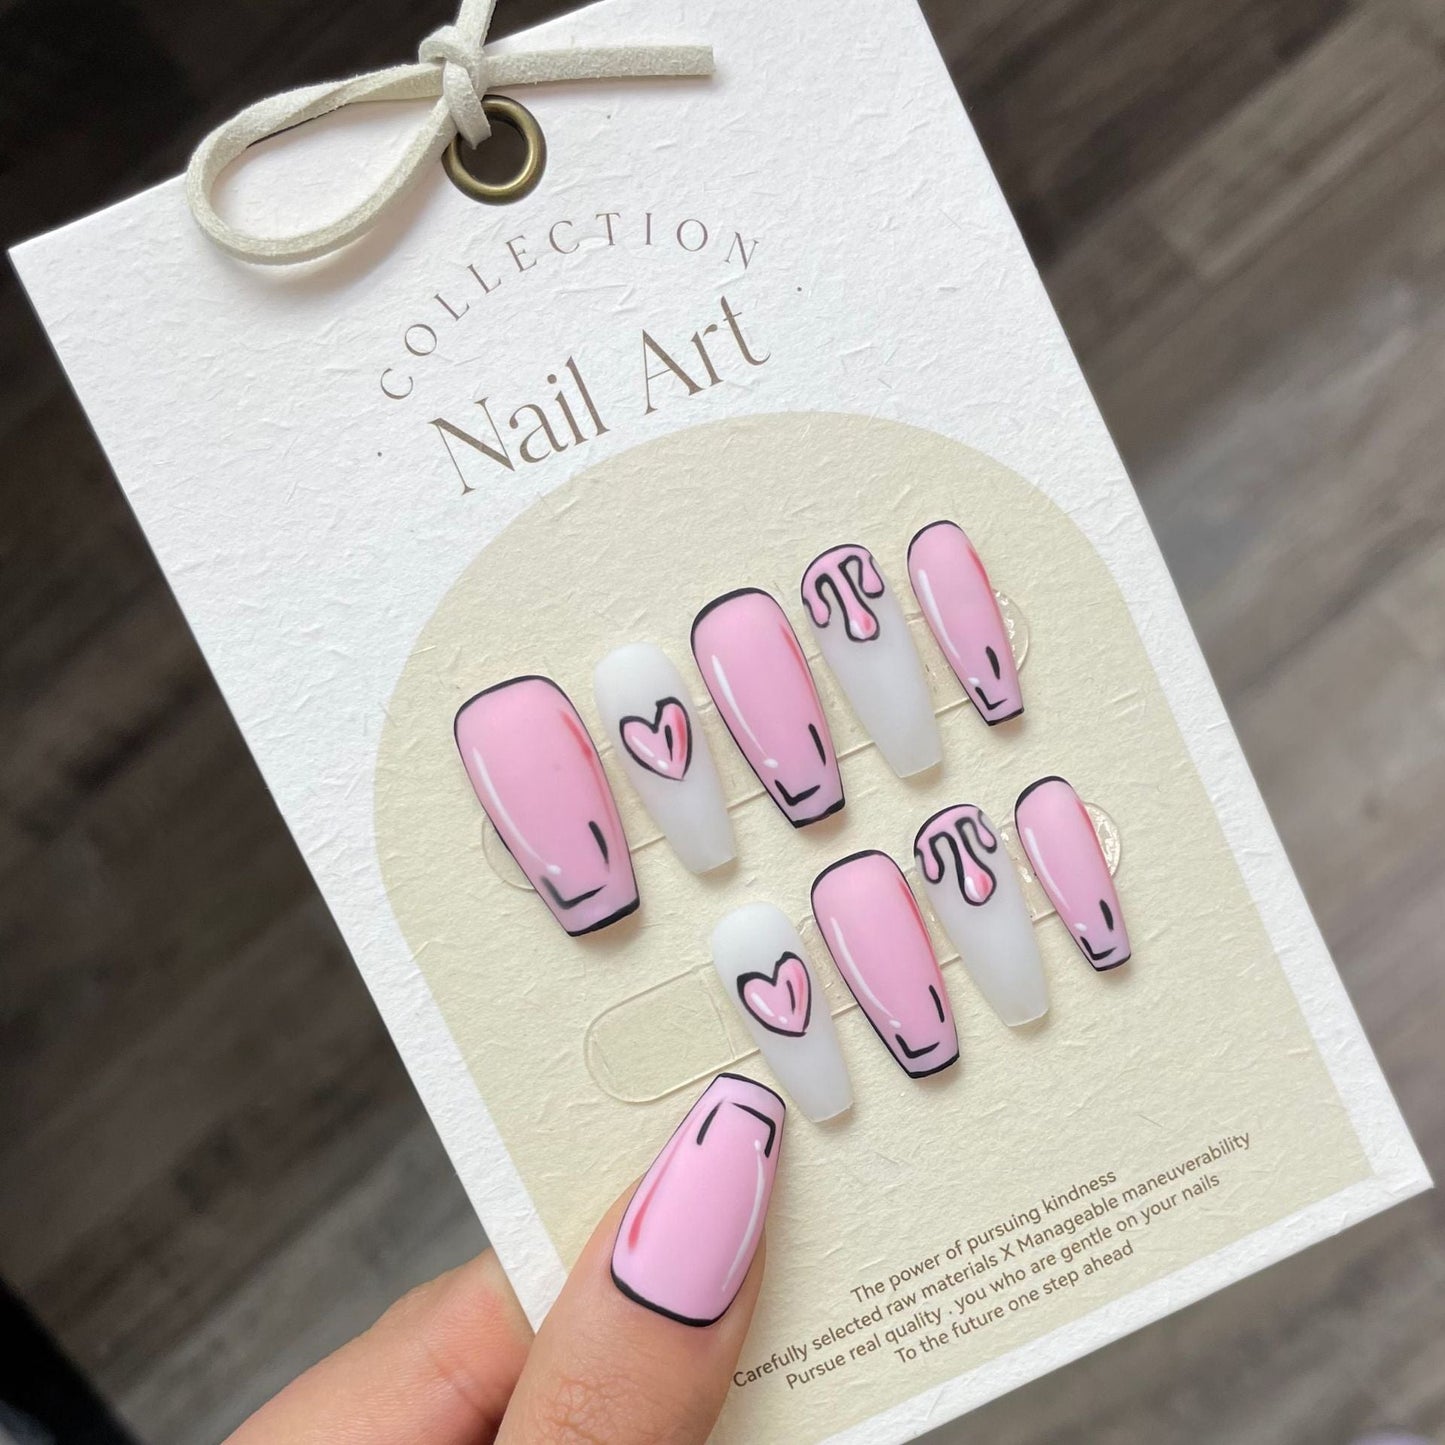 791 Handdrawn anime style press on nails 100% handmade false nails pink white